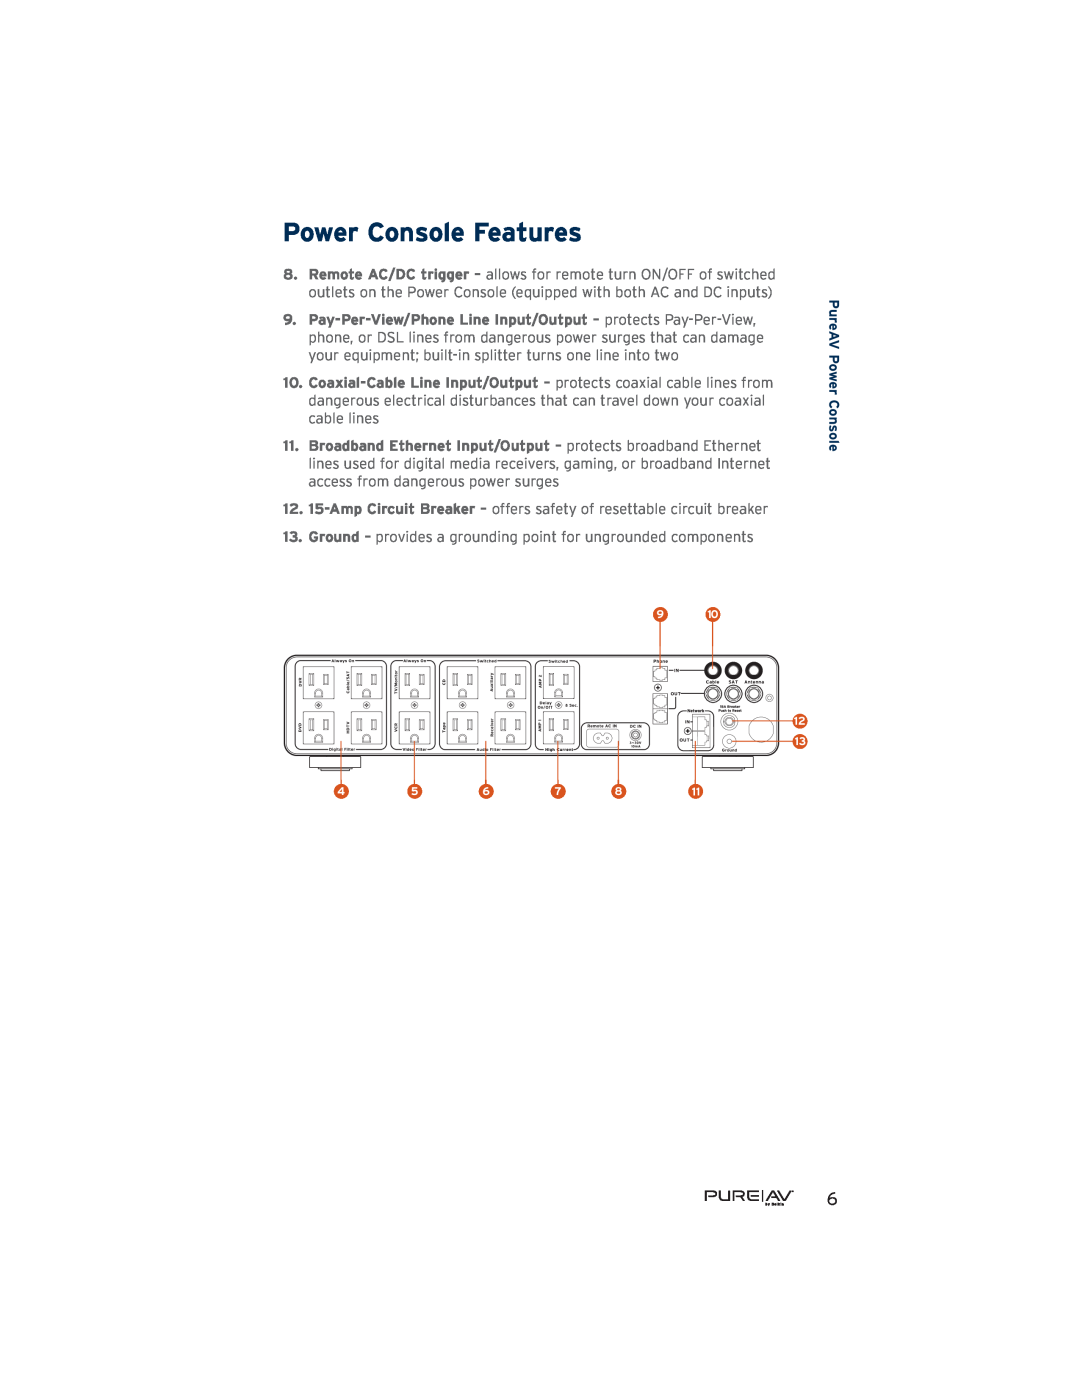 Belkin AP21300-12 user manual Power Console Features, PureAV Power Console 